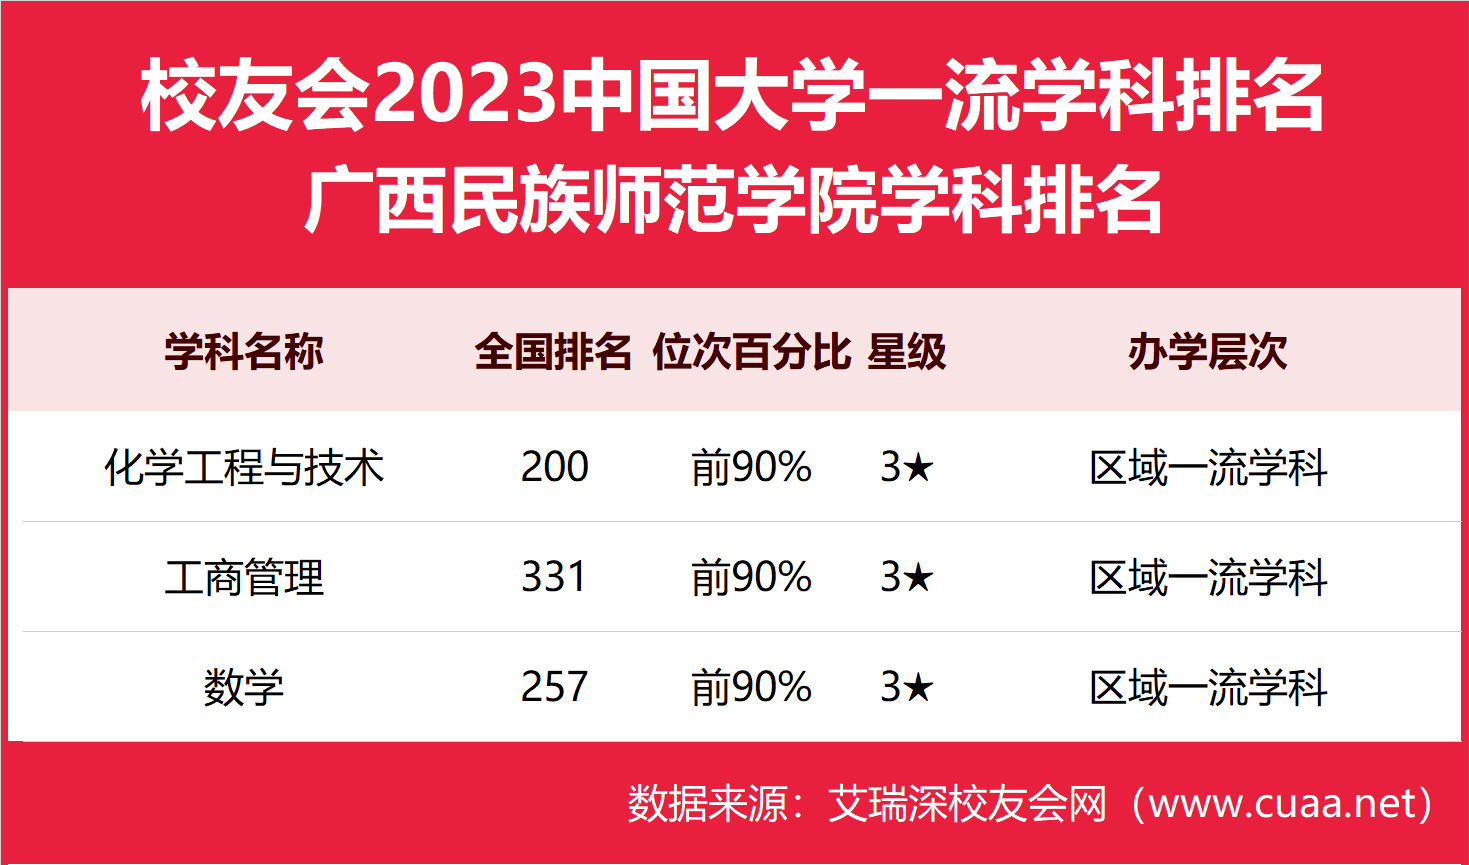 数学第257，2023广西民族师范学院最好学科排名，工商管理第331